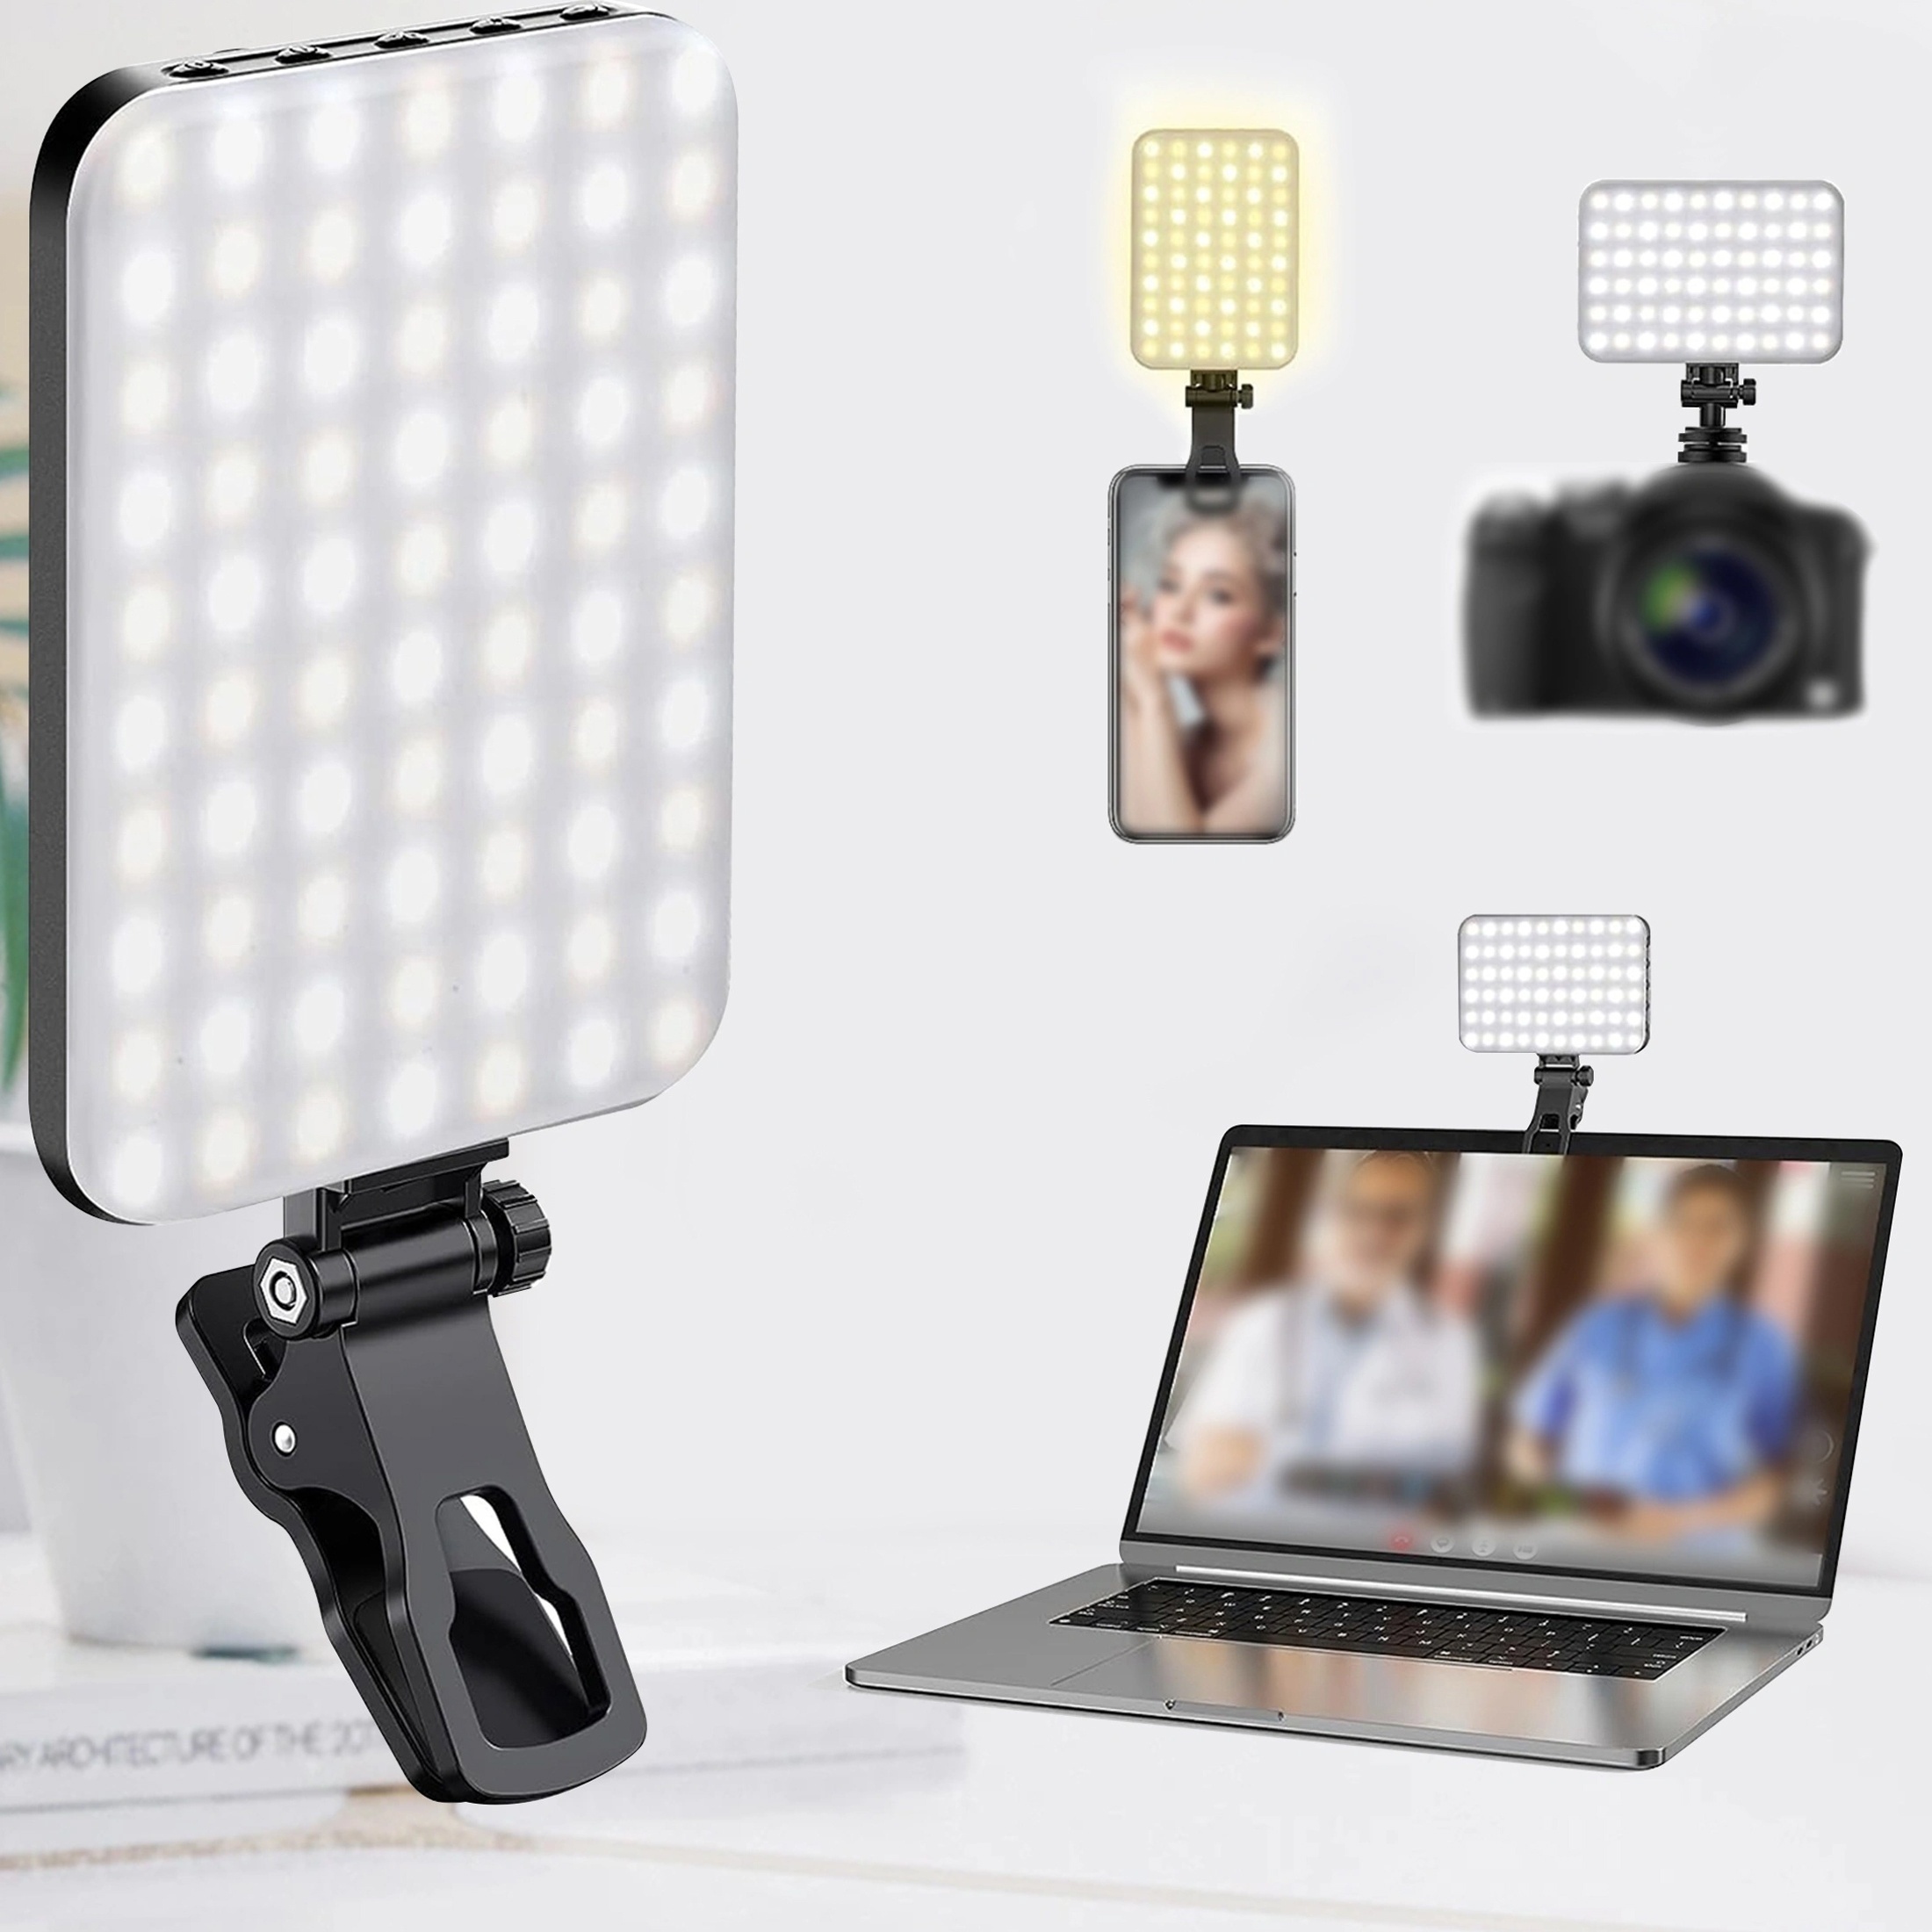  King Ma Luz portátil para selfie, 3 modelos de luz LED